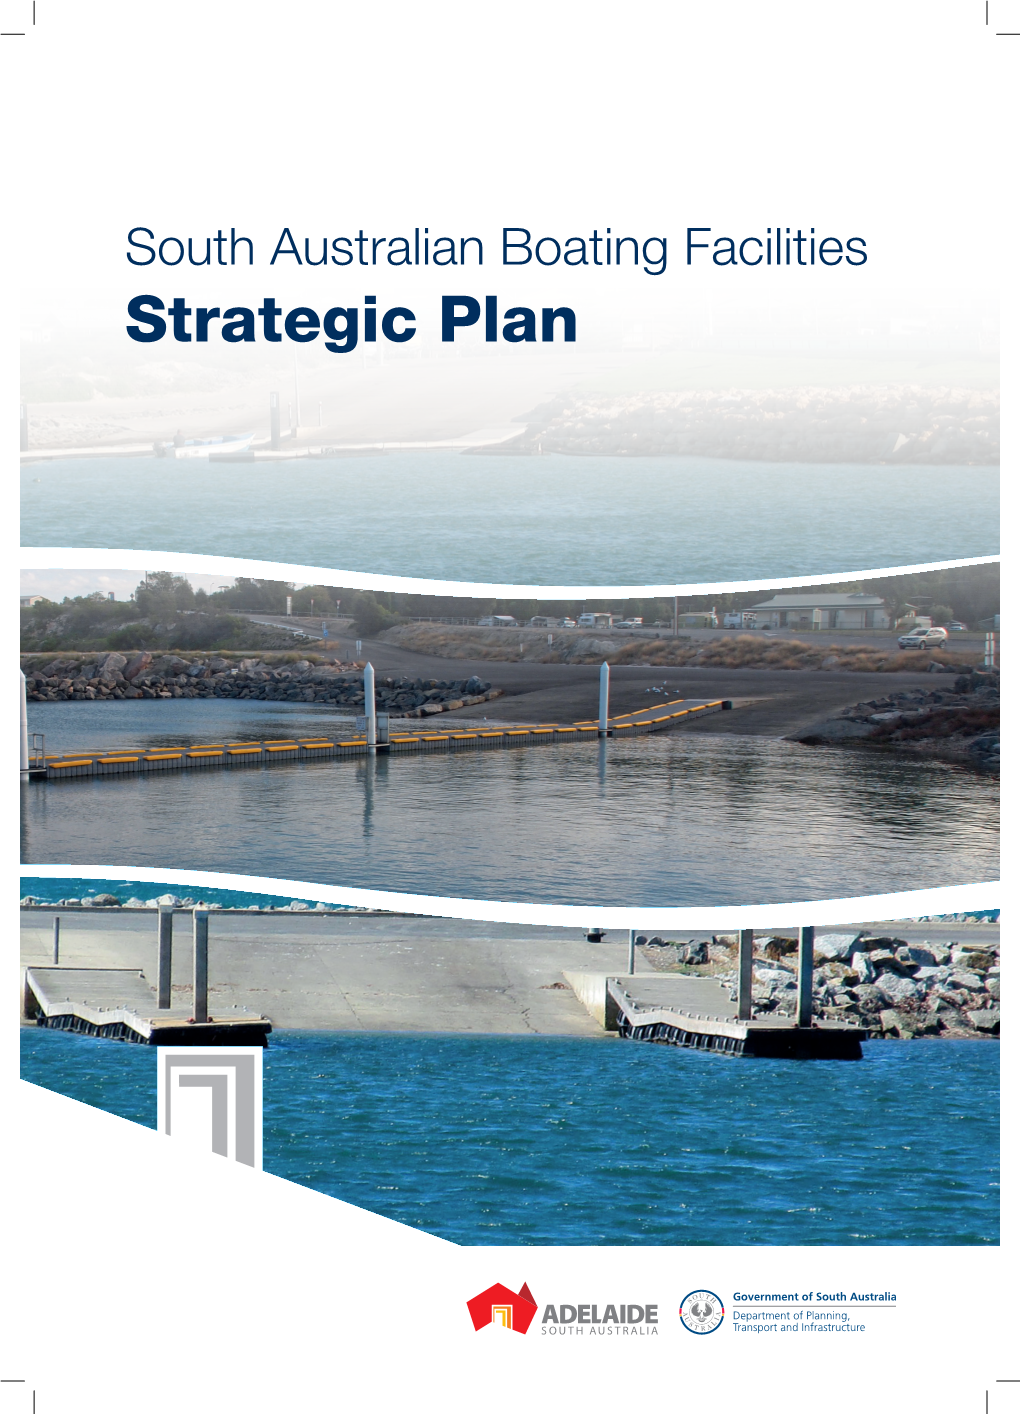 South Australian Boating Facilities Strategic Plan